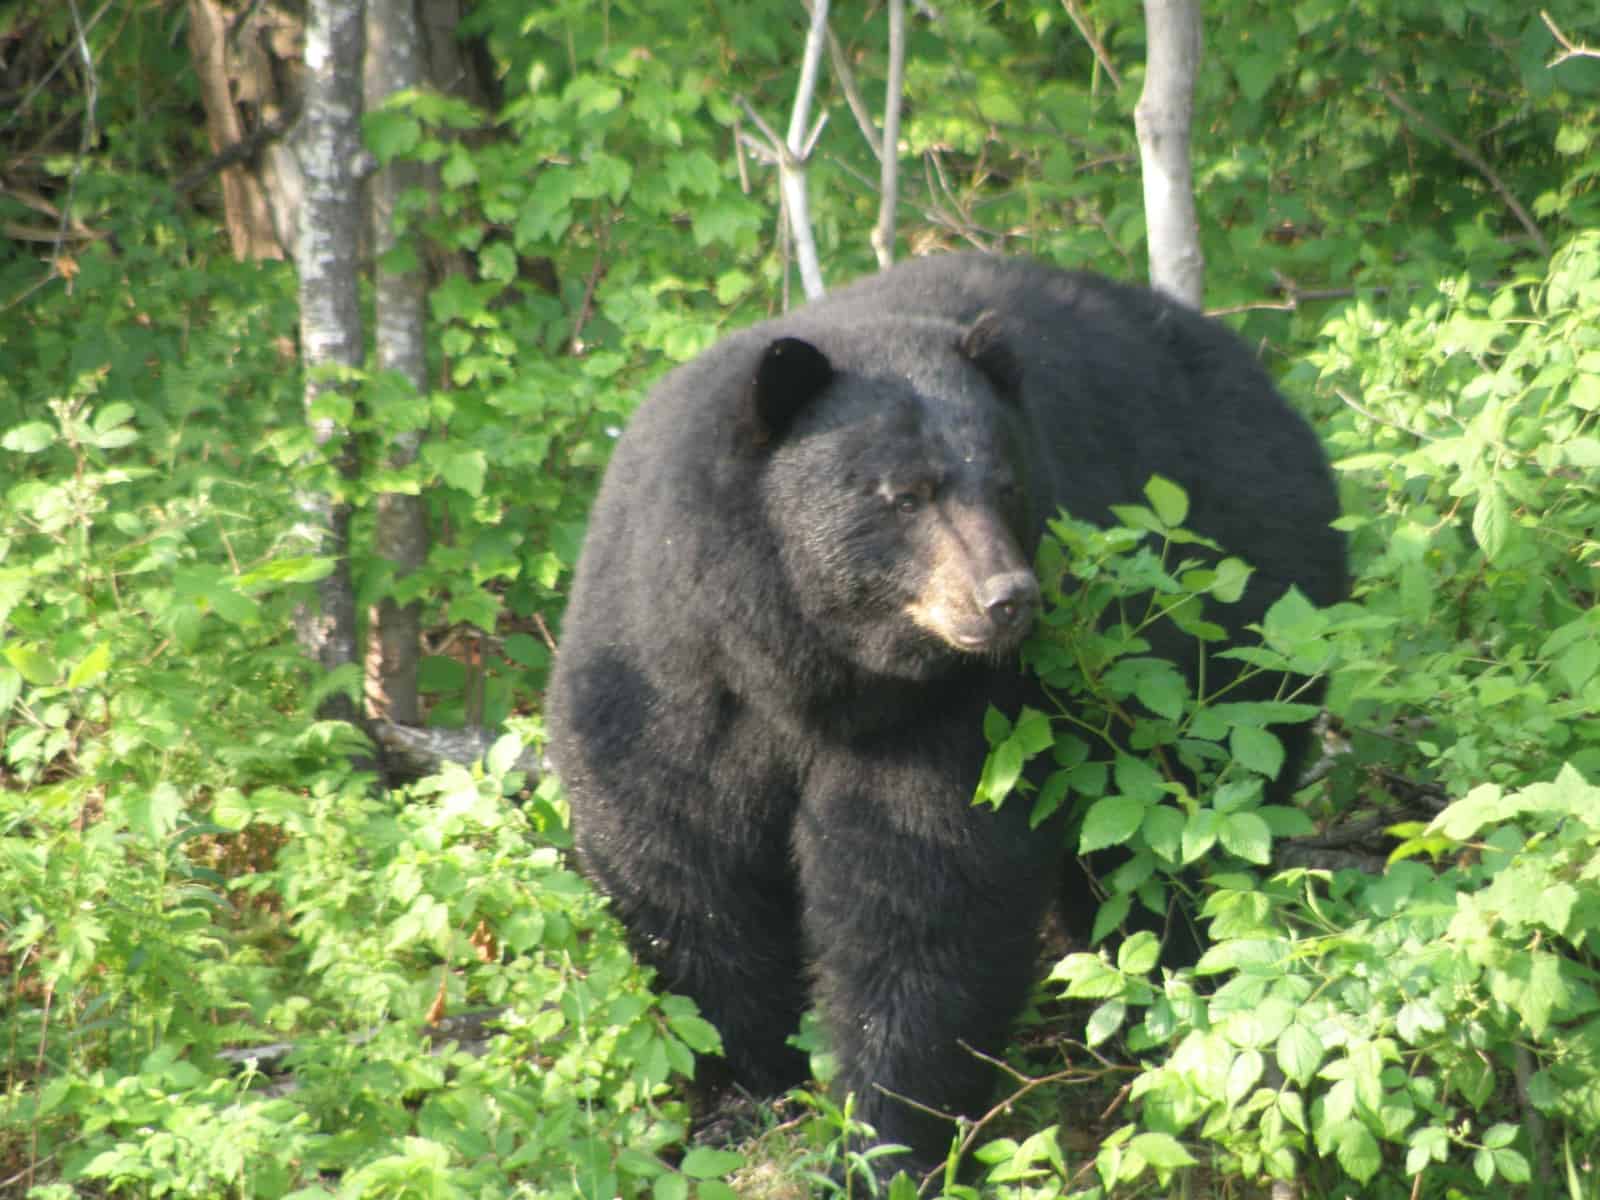 Vermont bear hunting seasons are Sept. 1-Nov. 13 and Nov. 14-22